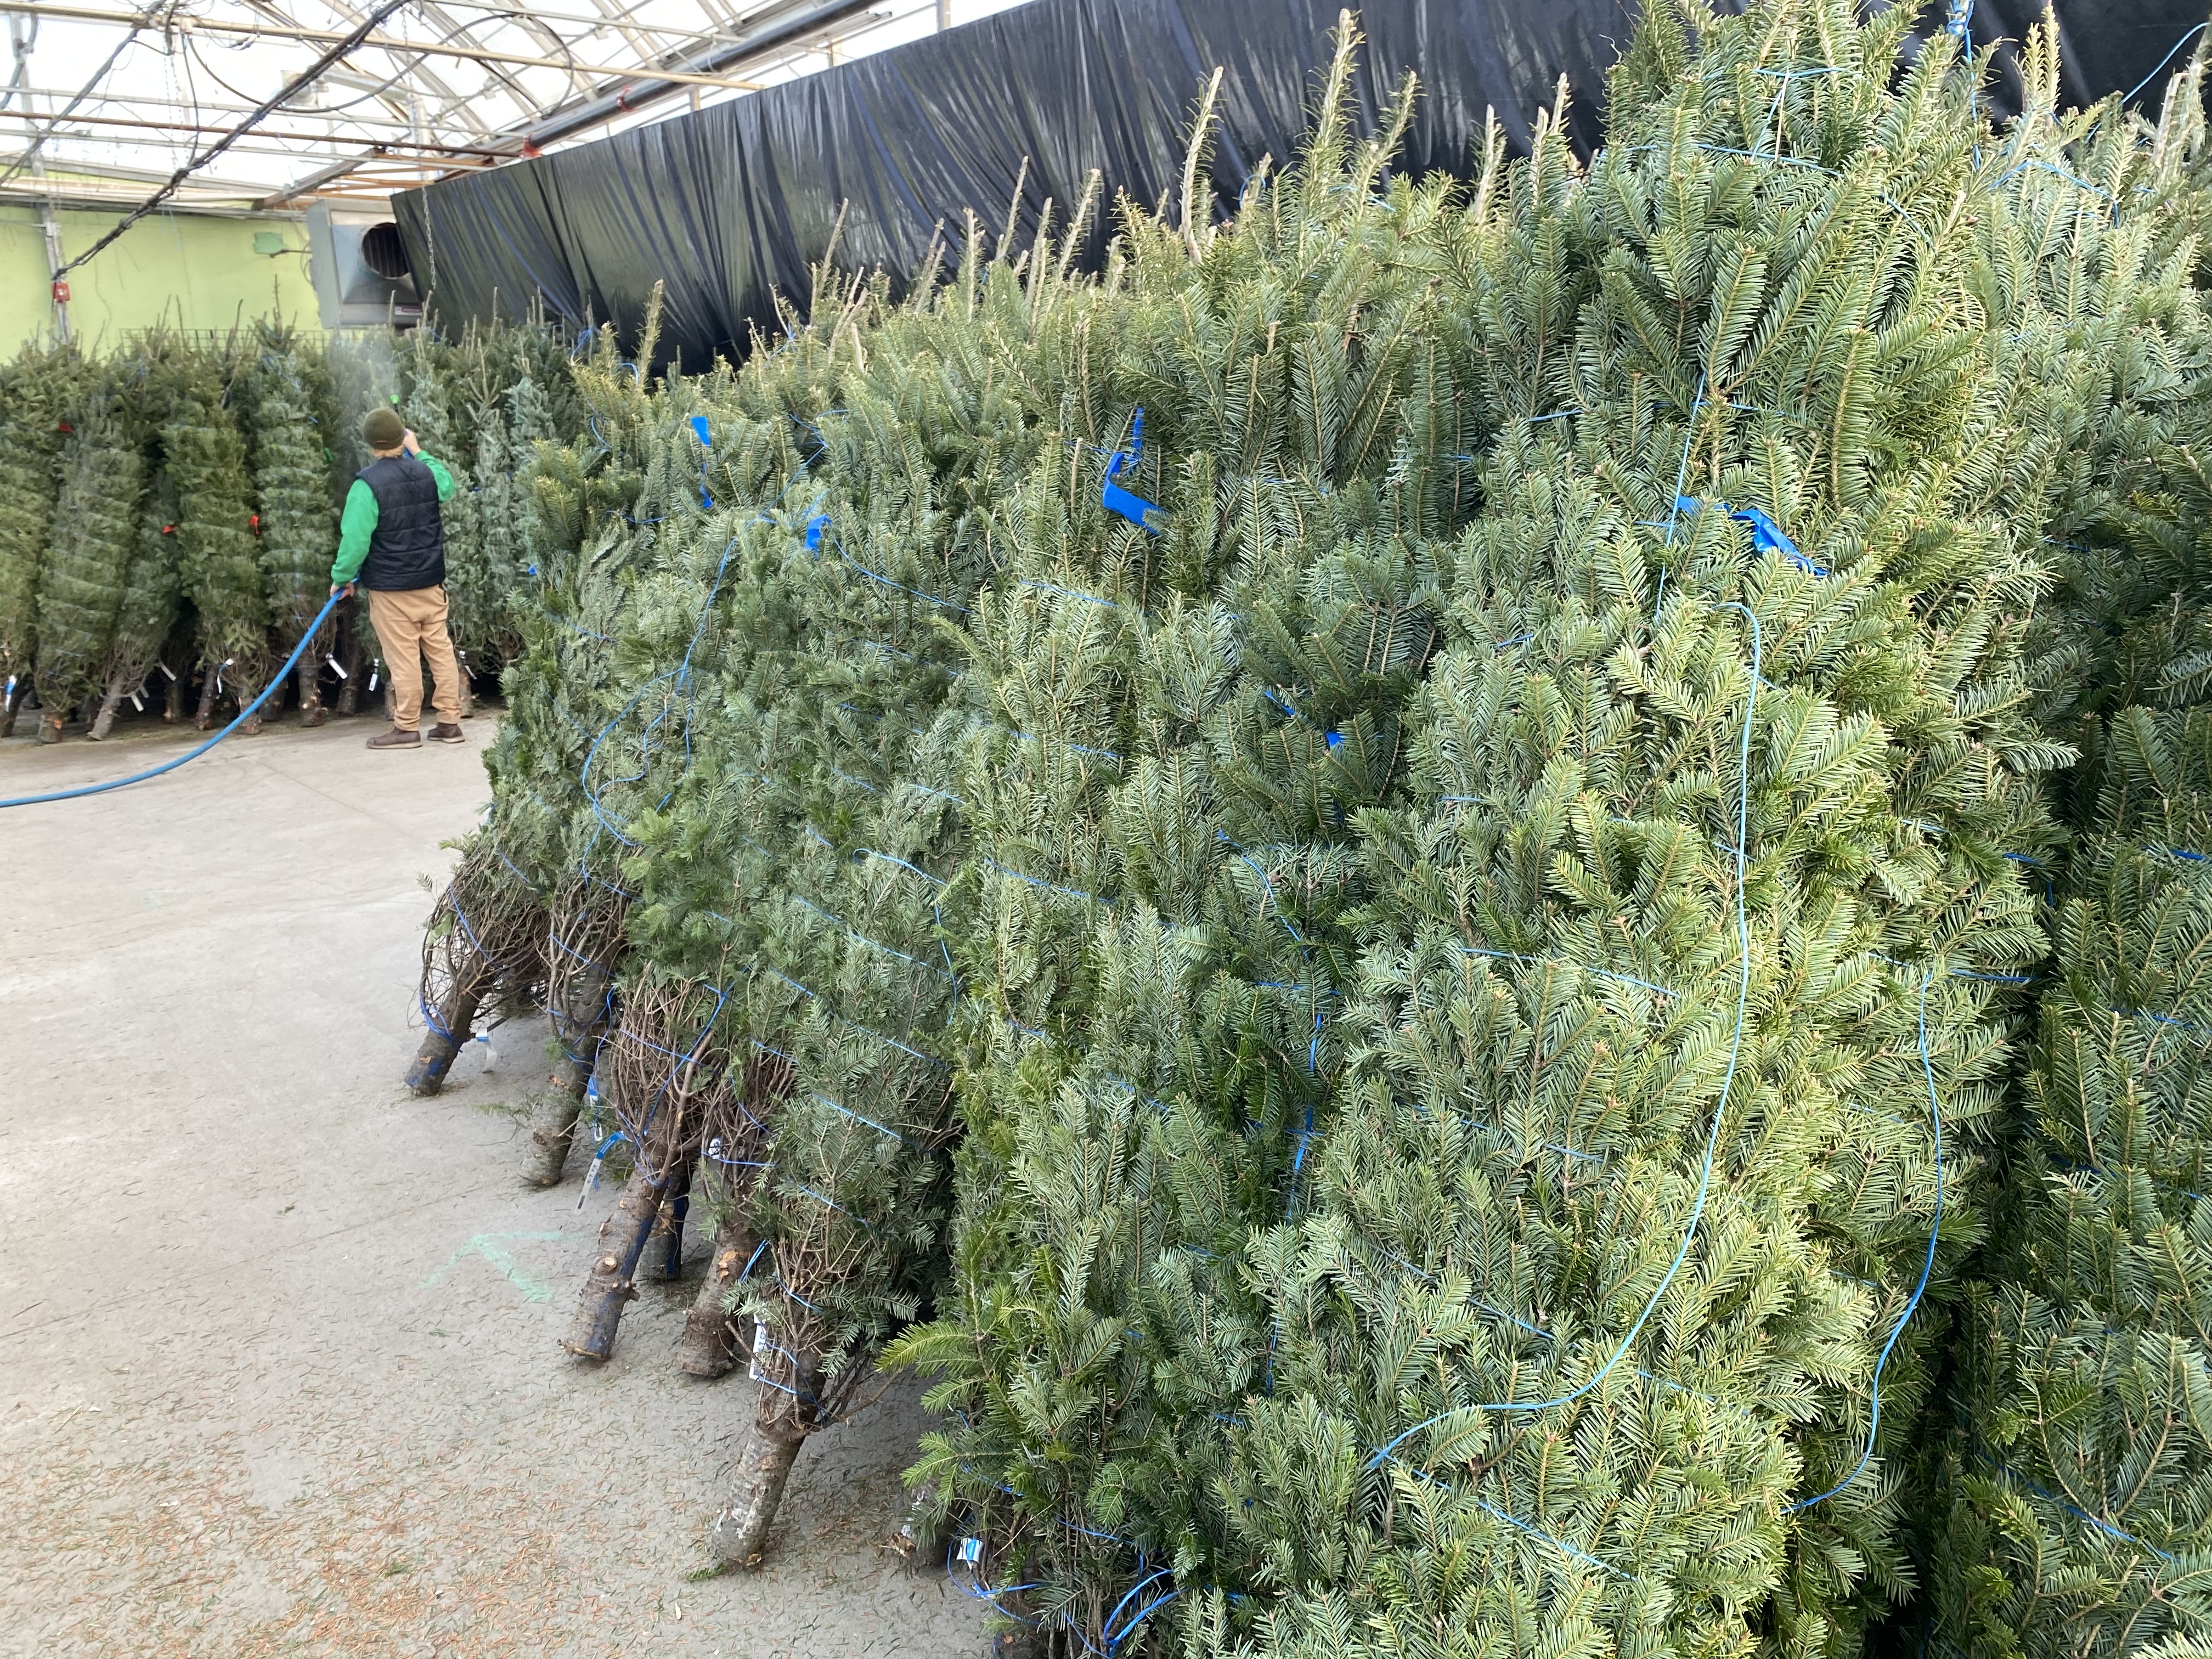 London, Ont. farms report Christmas tree shortage